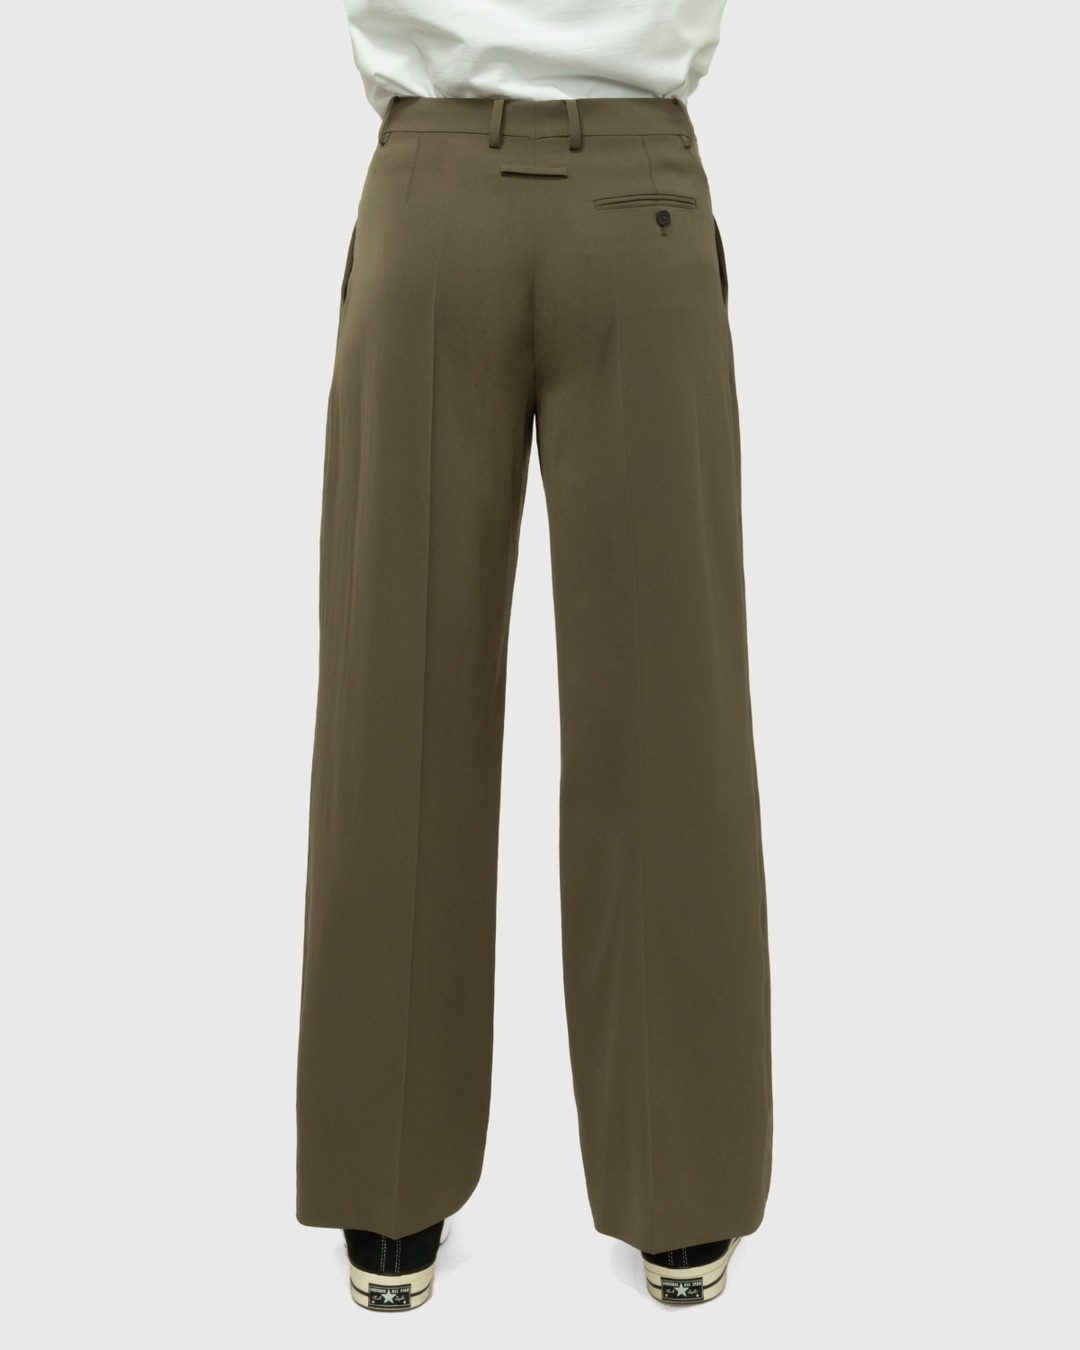 Jean Paul Gaultier – Classic Woven Trouser Khaki - Pants - Brown - Image 3